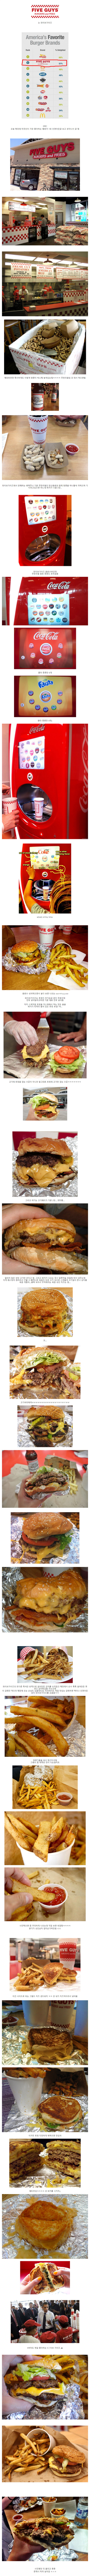 No.2 burger brand in the U.S.jpg